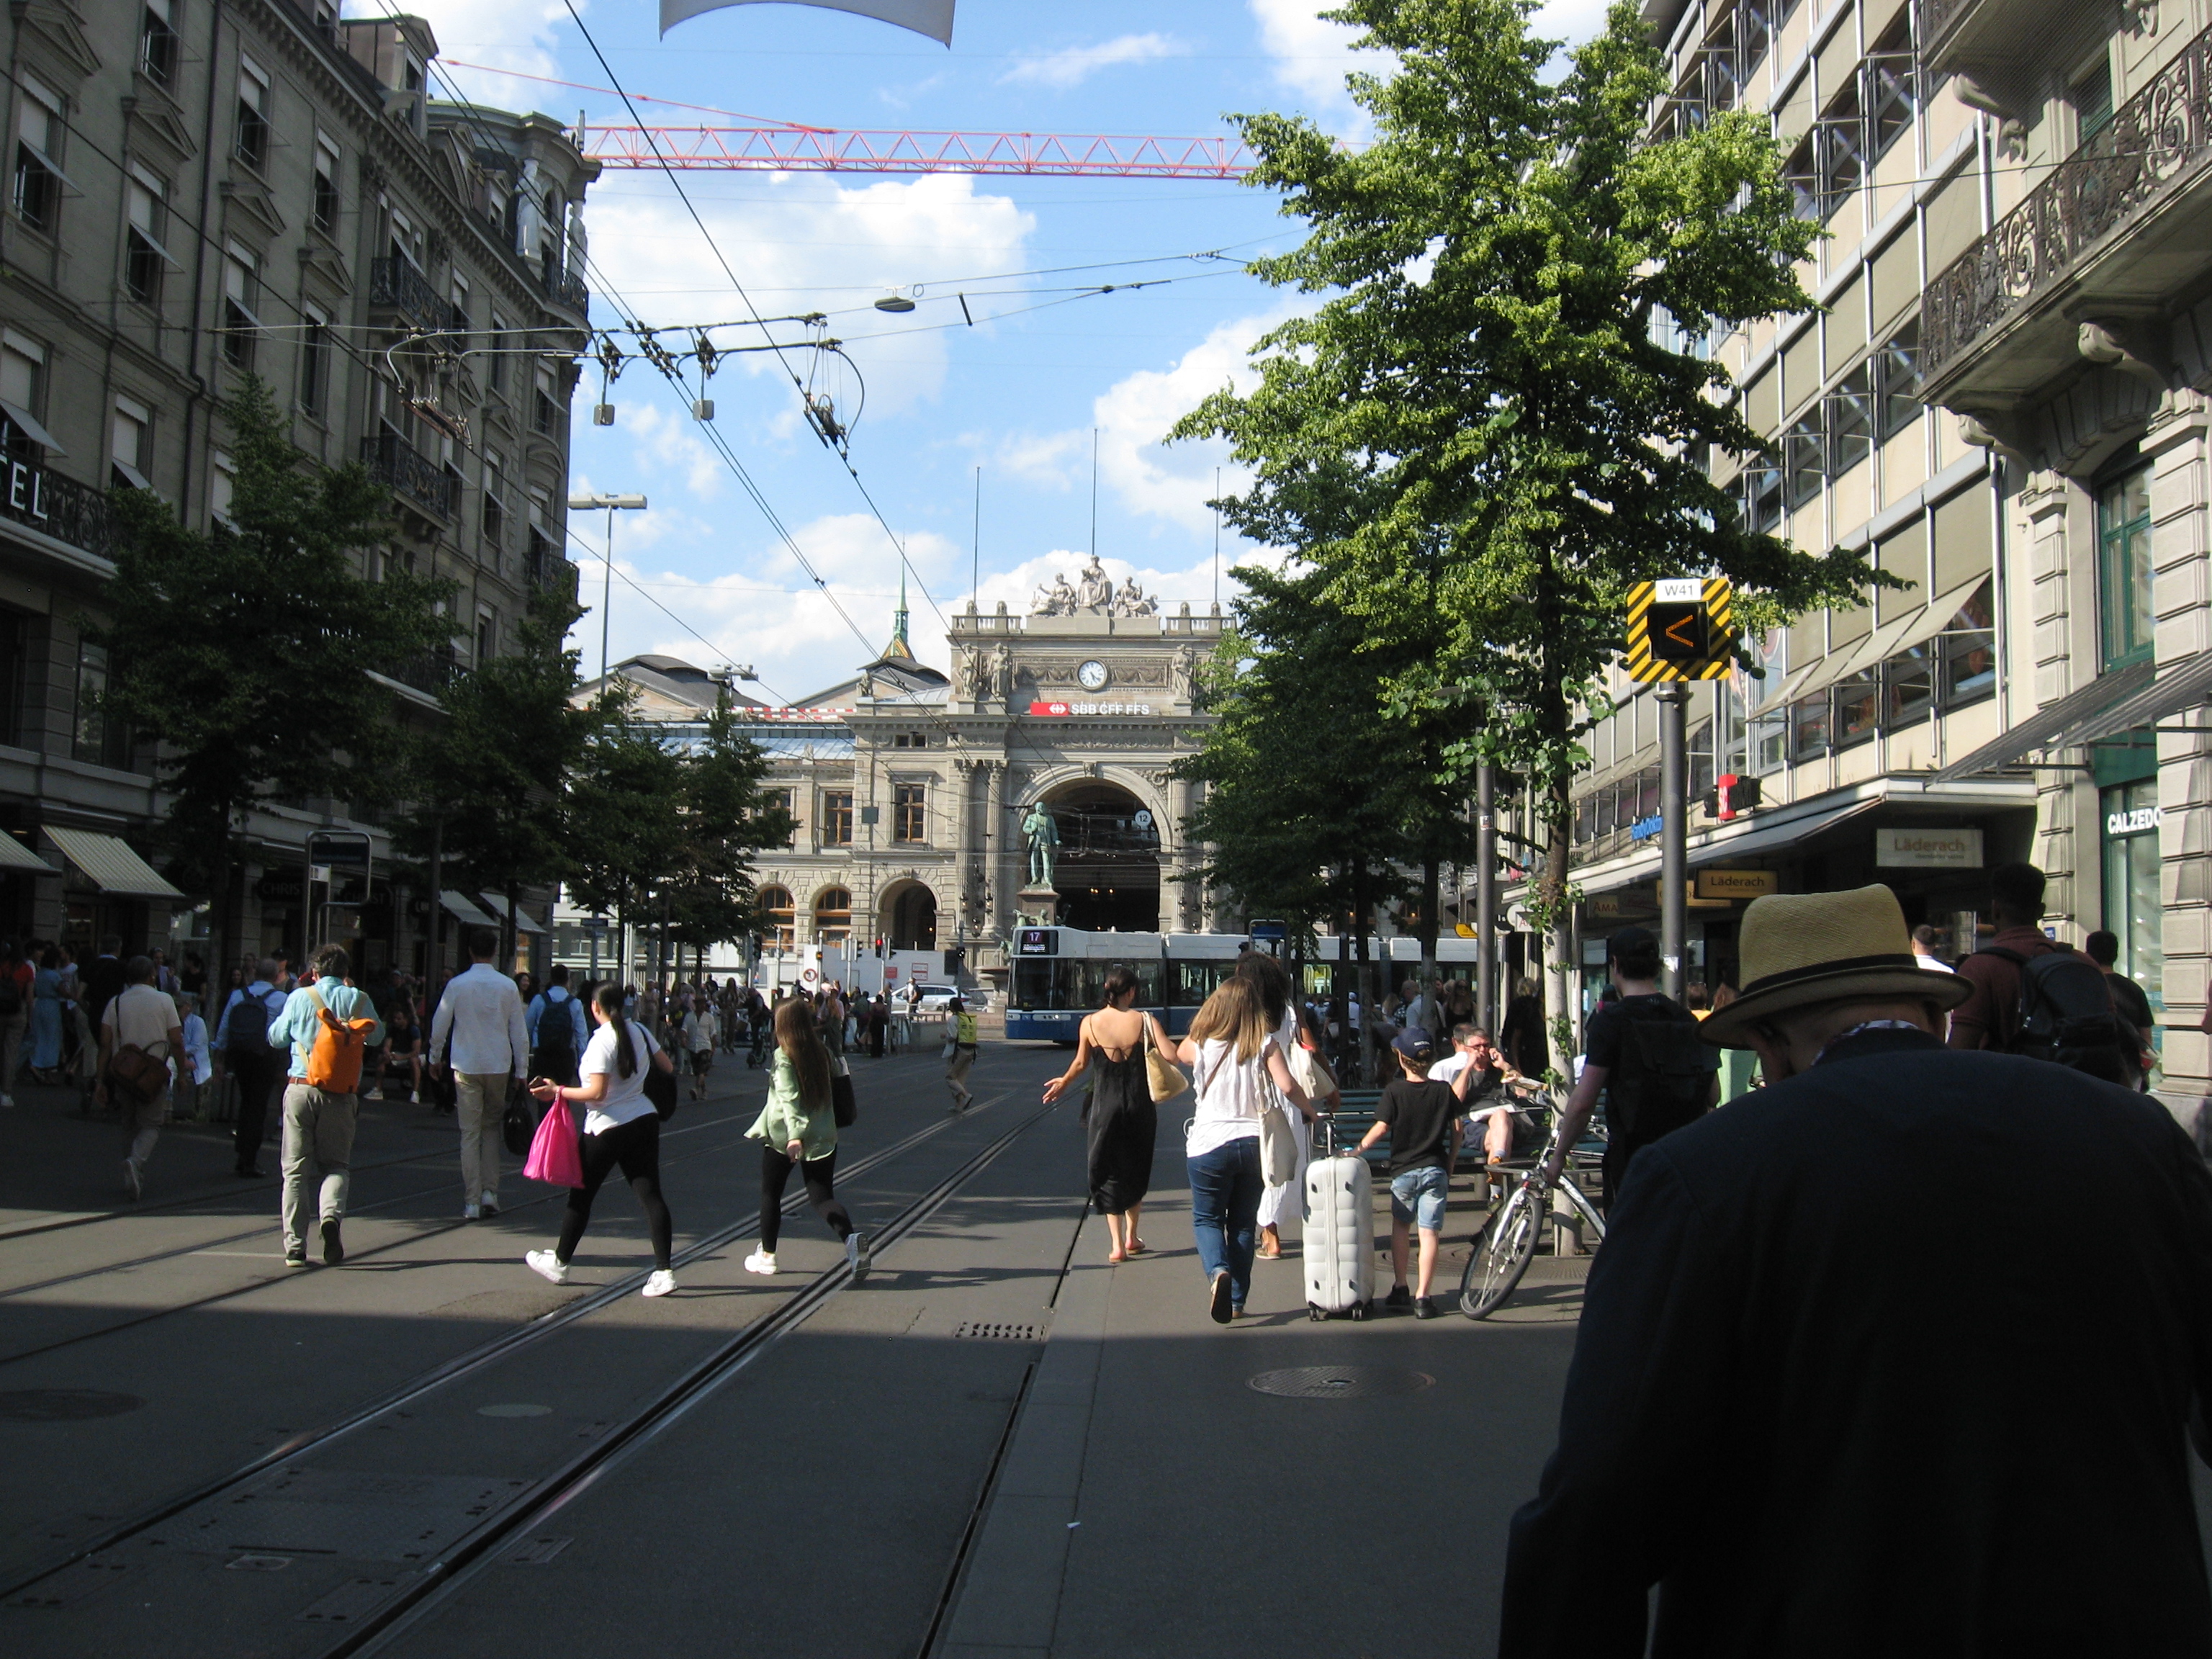 Zürich HB as seen from Bahnhofstrasse